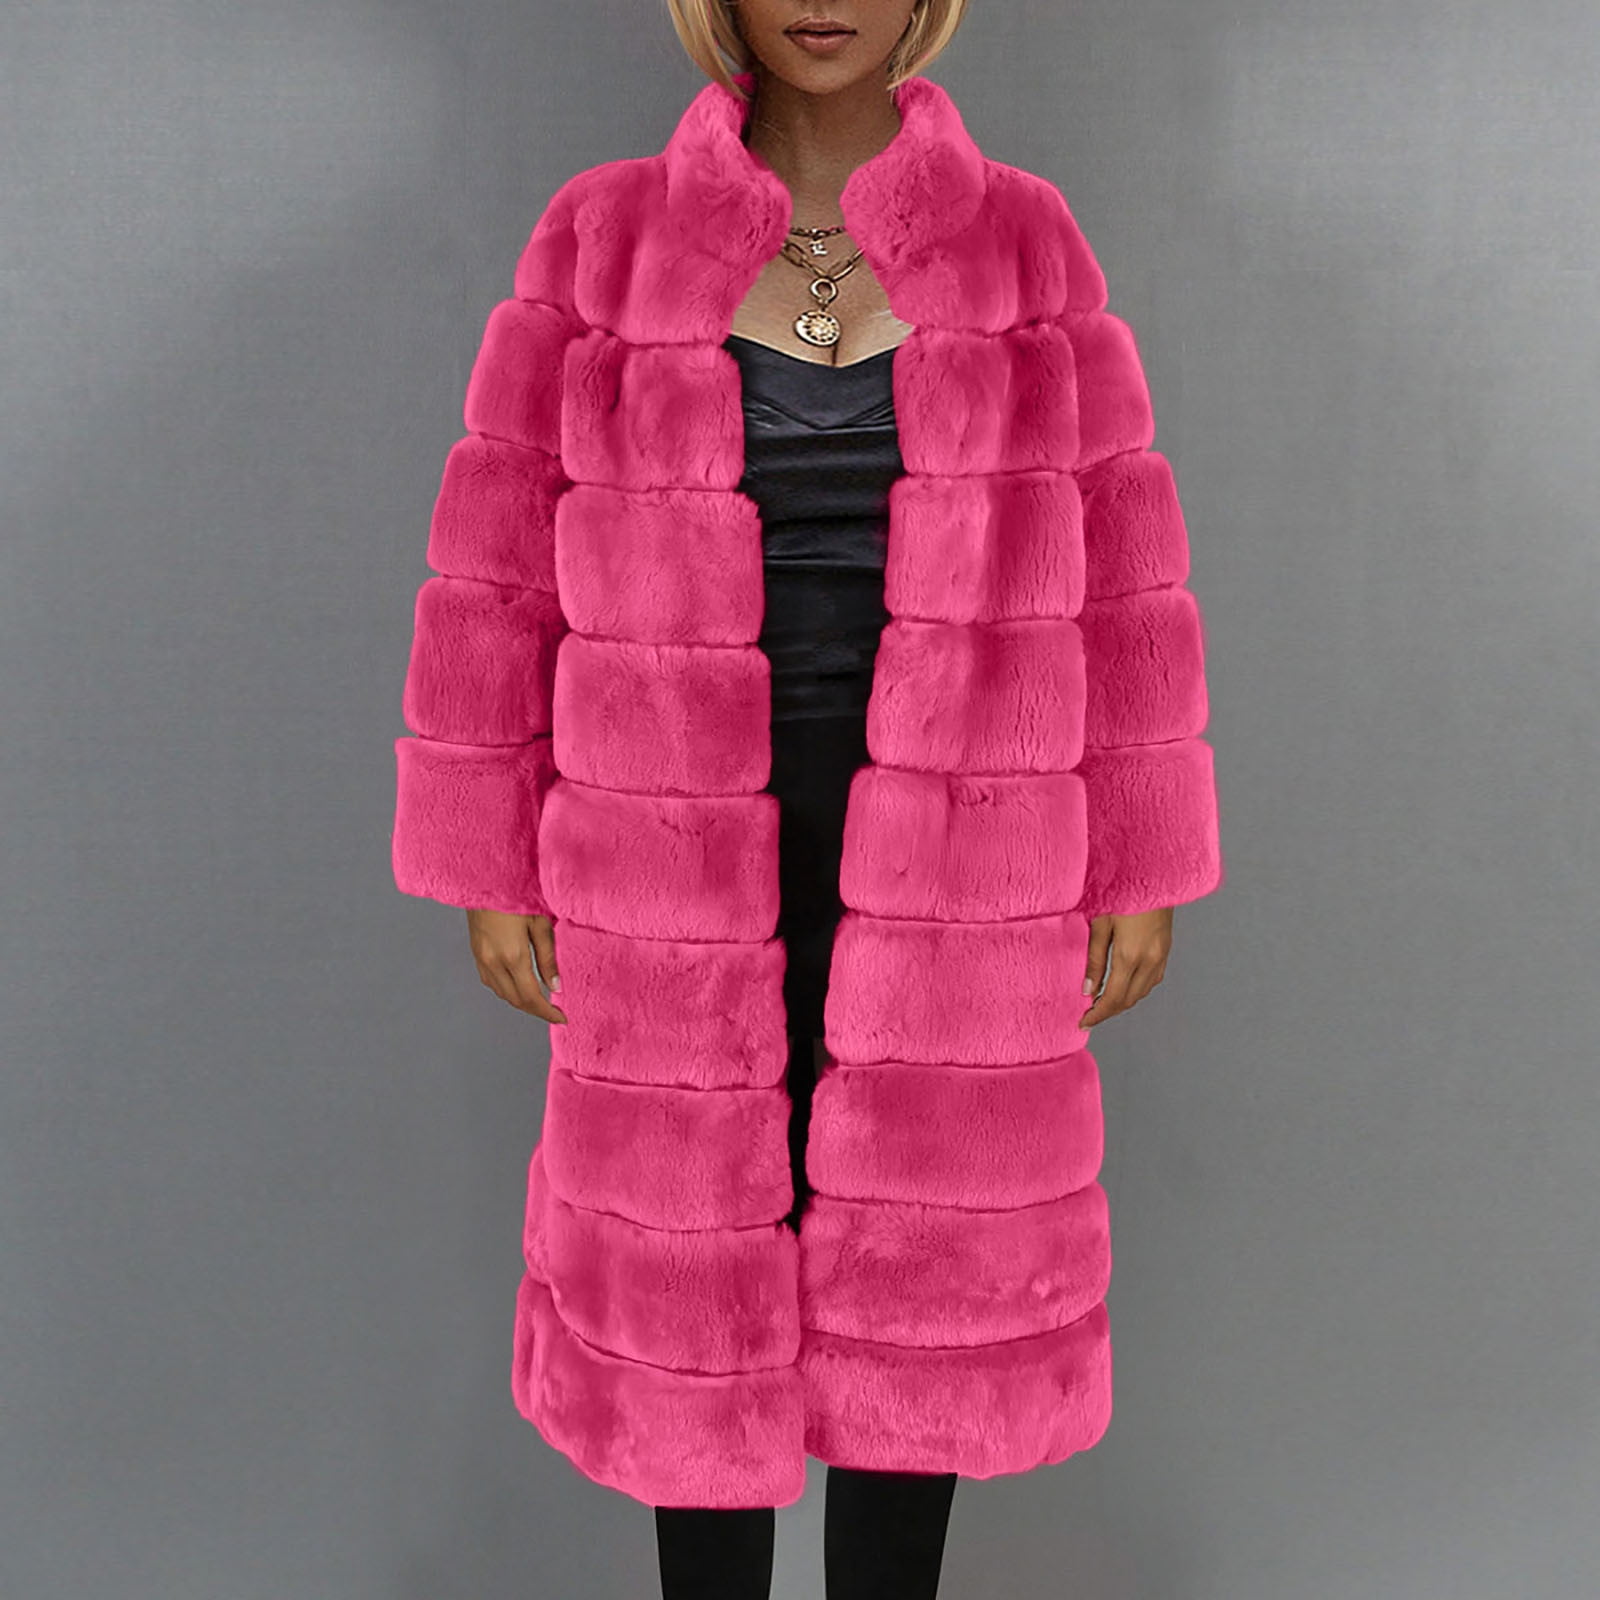 Hot Pink Fur Coat  Pink fur coat, Hot pink fur coat, Fur coats women